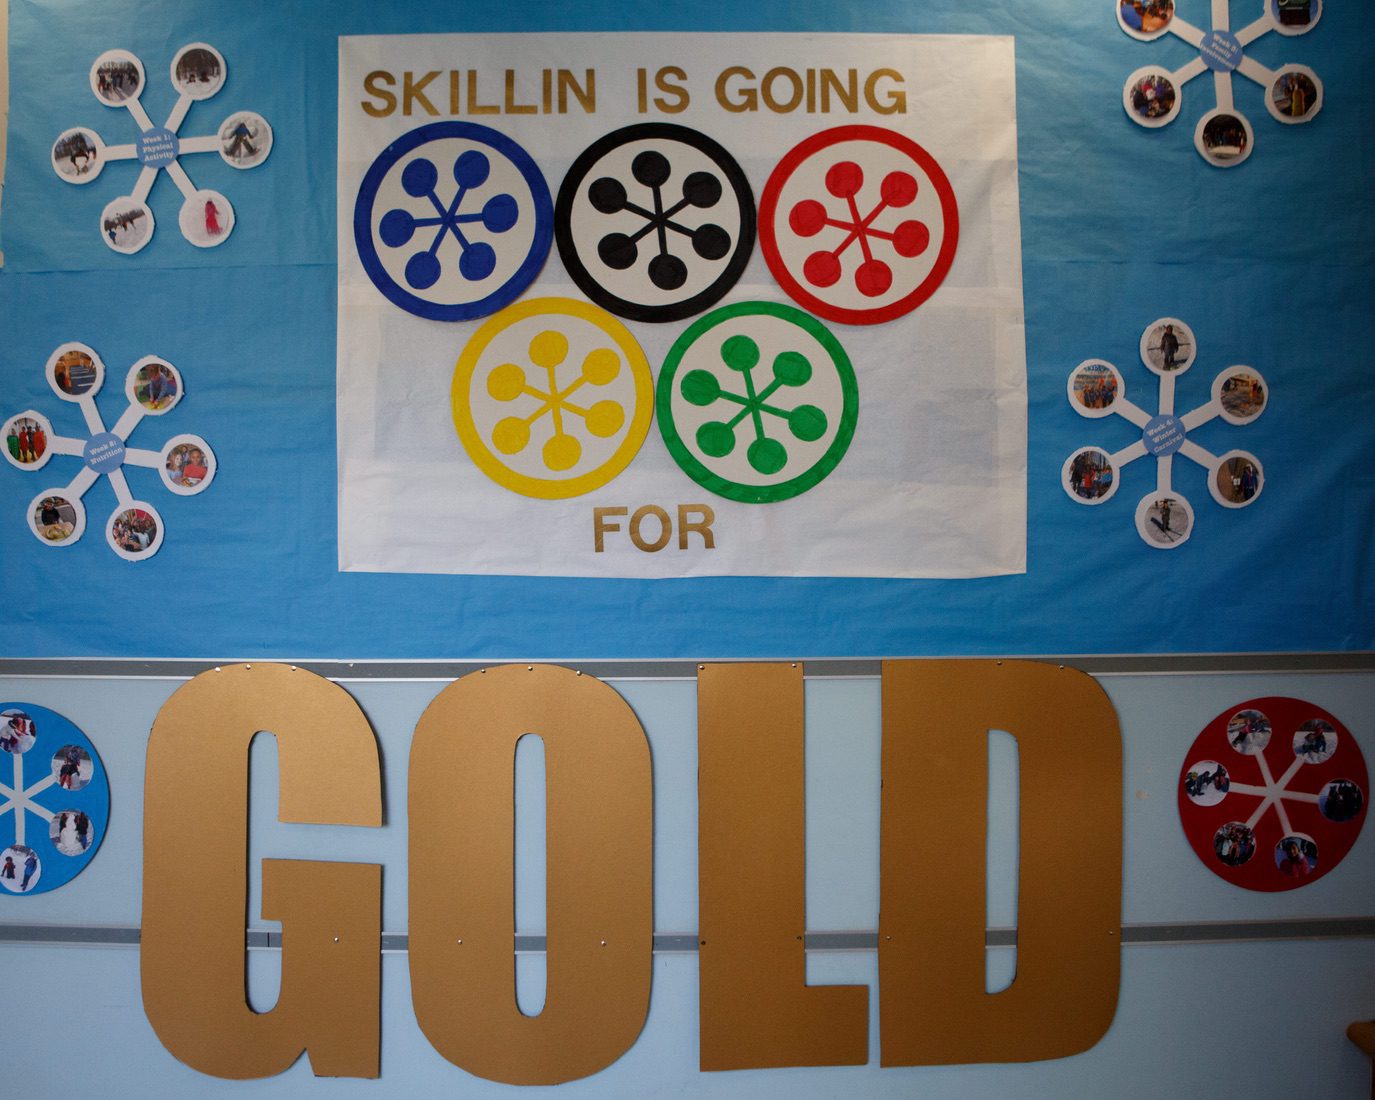 WinterKids Winter Games 2017 Skillin Silver Medal Ceremony SDP0001